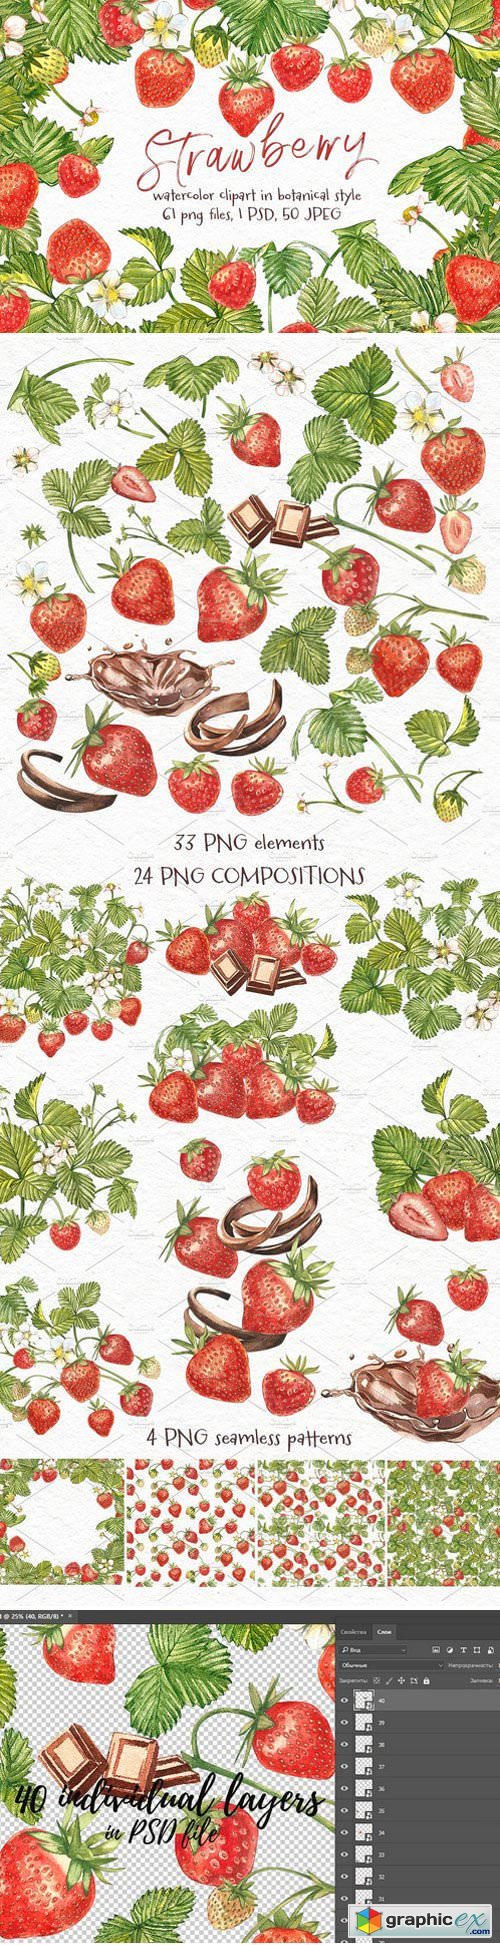 Strawberry illustrations